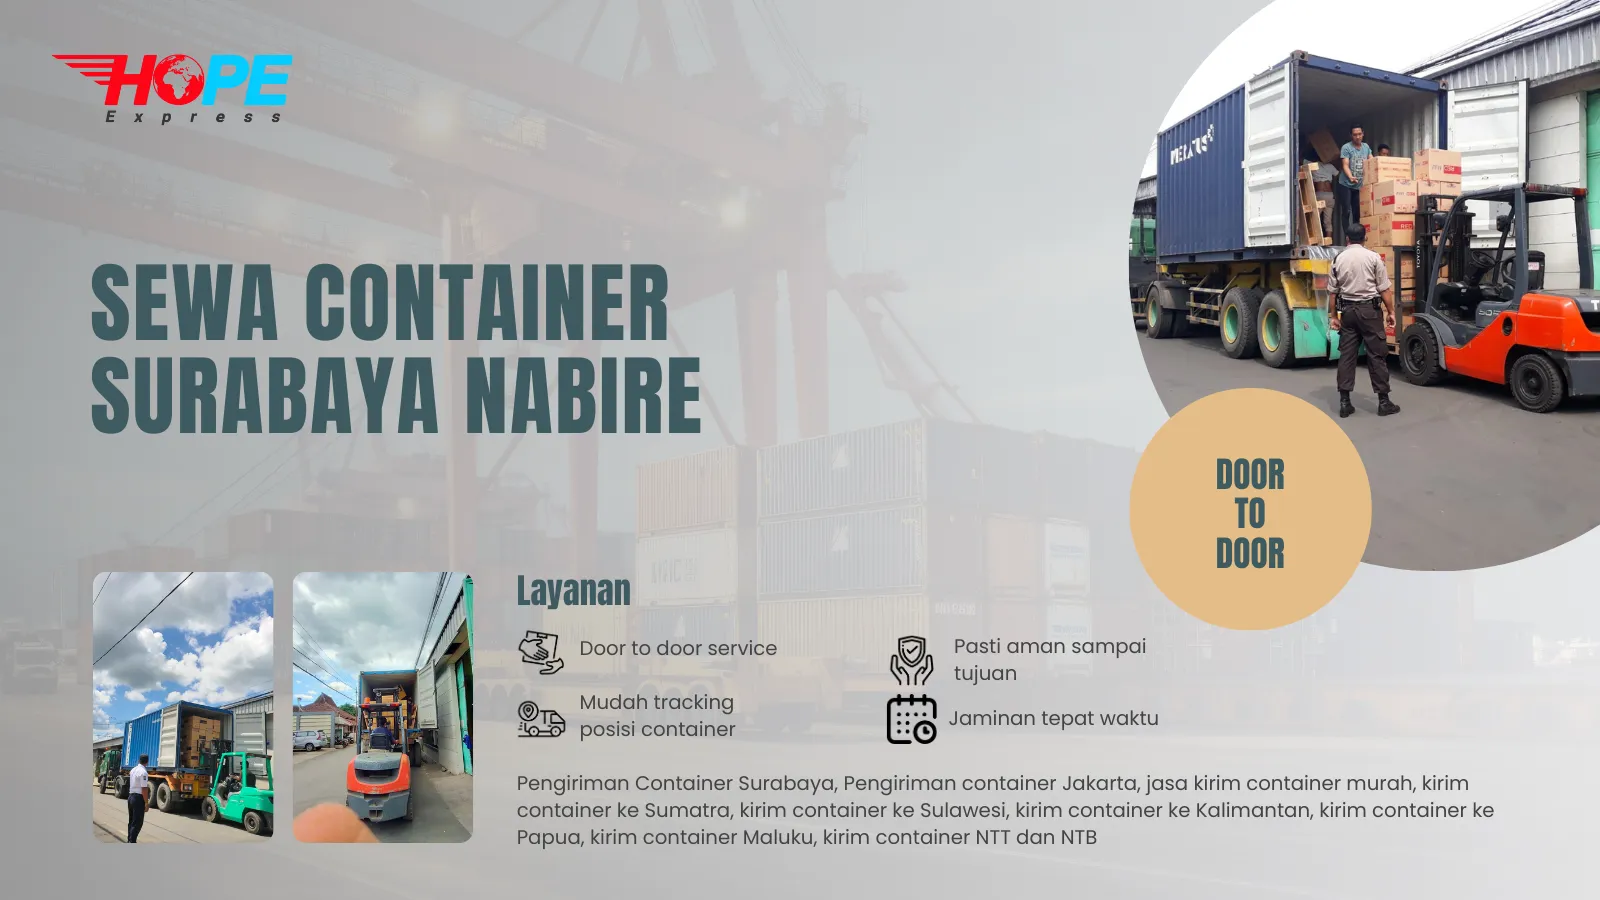 Sewa Container Surabaya Nabire